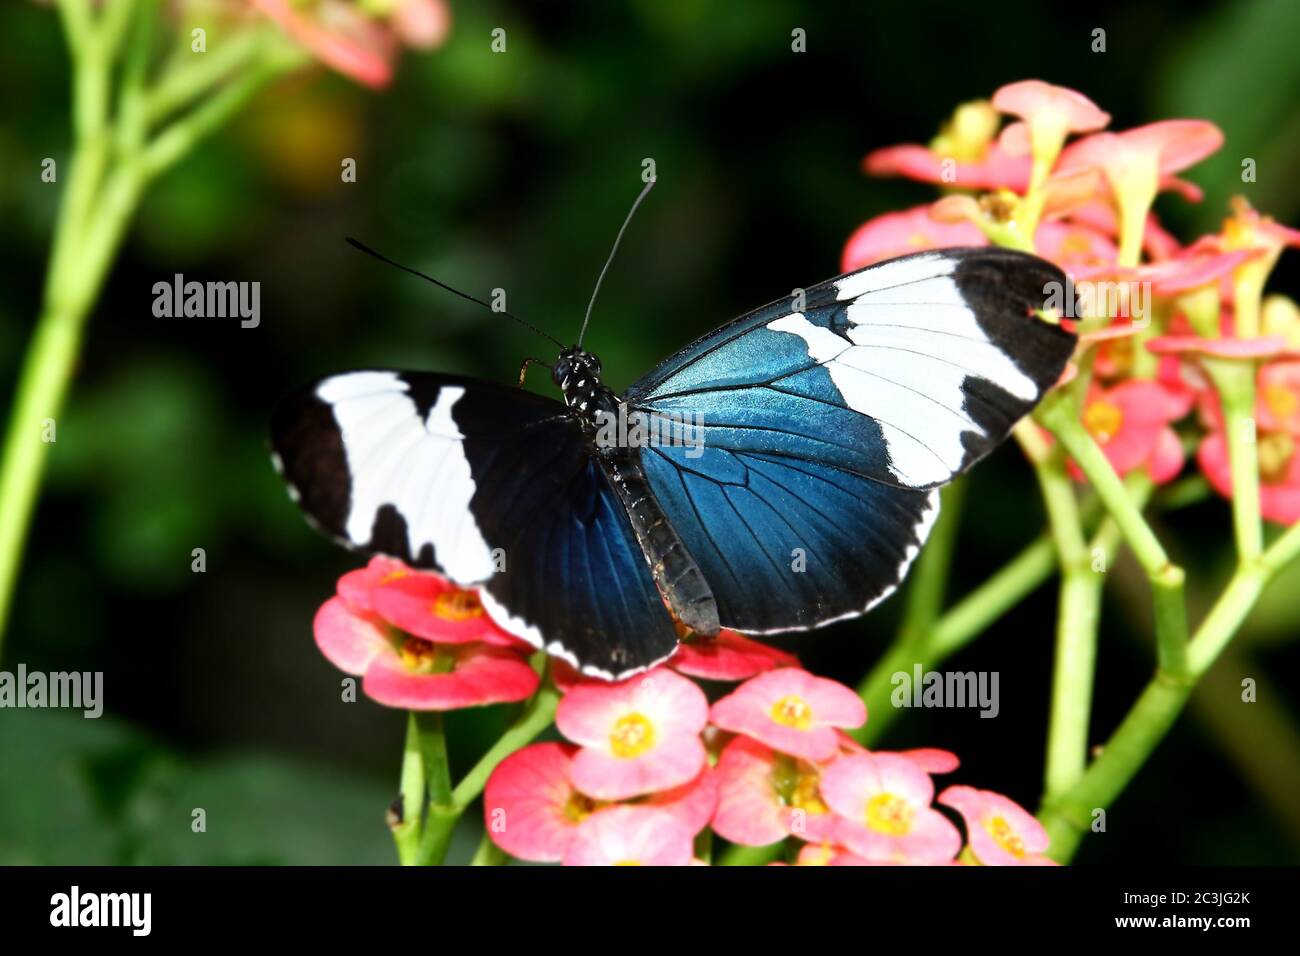 Black Butterfly Heliconius sara theudela with white stripes feeding on flower Stock Photo